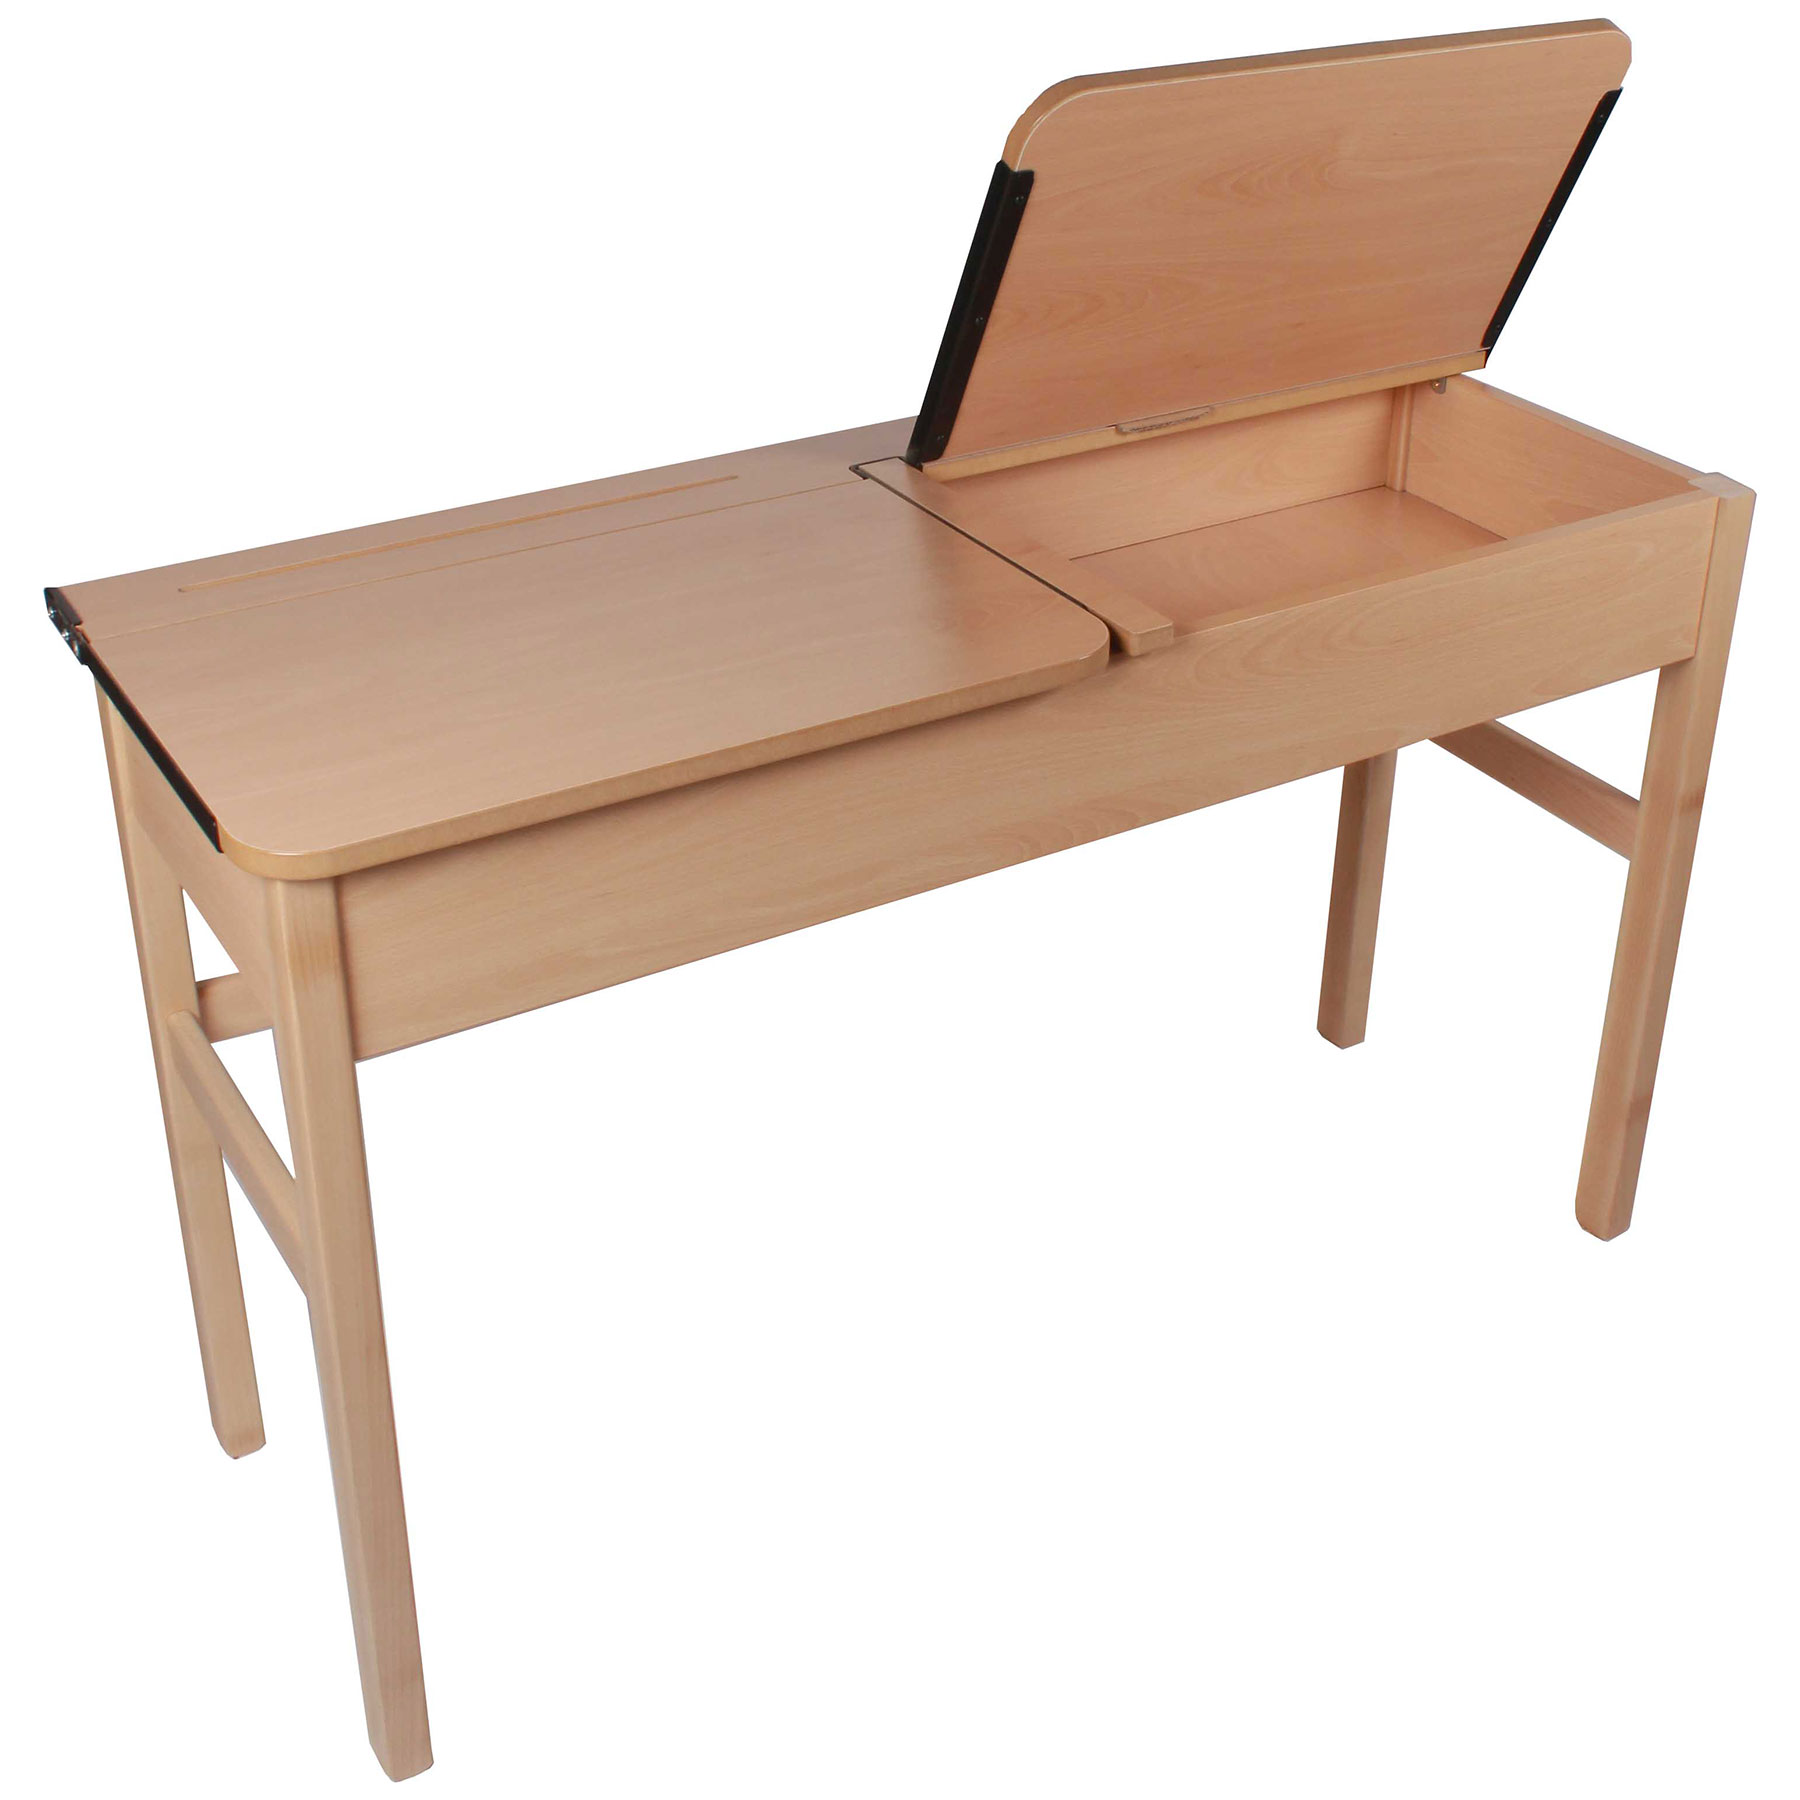 Wooden School Classroom Tables